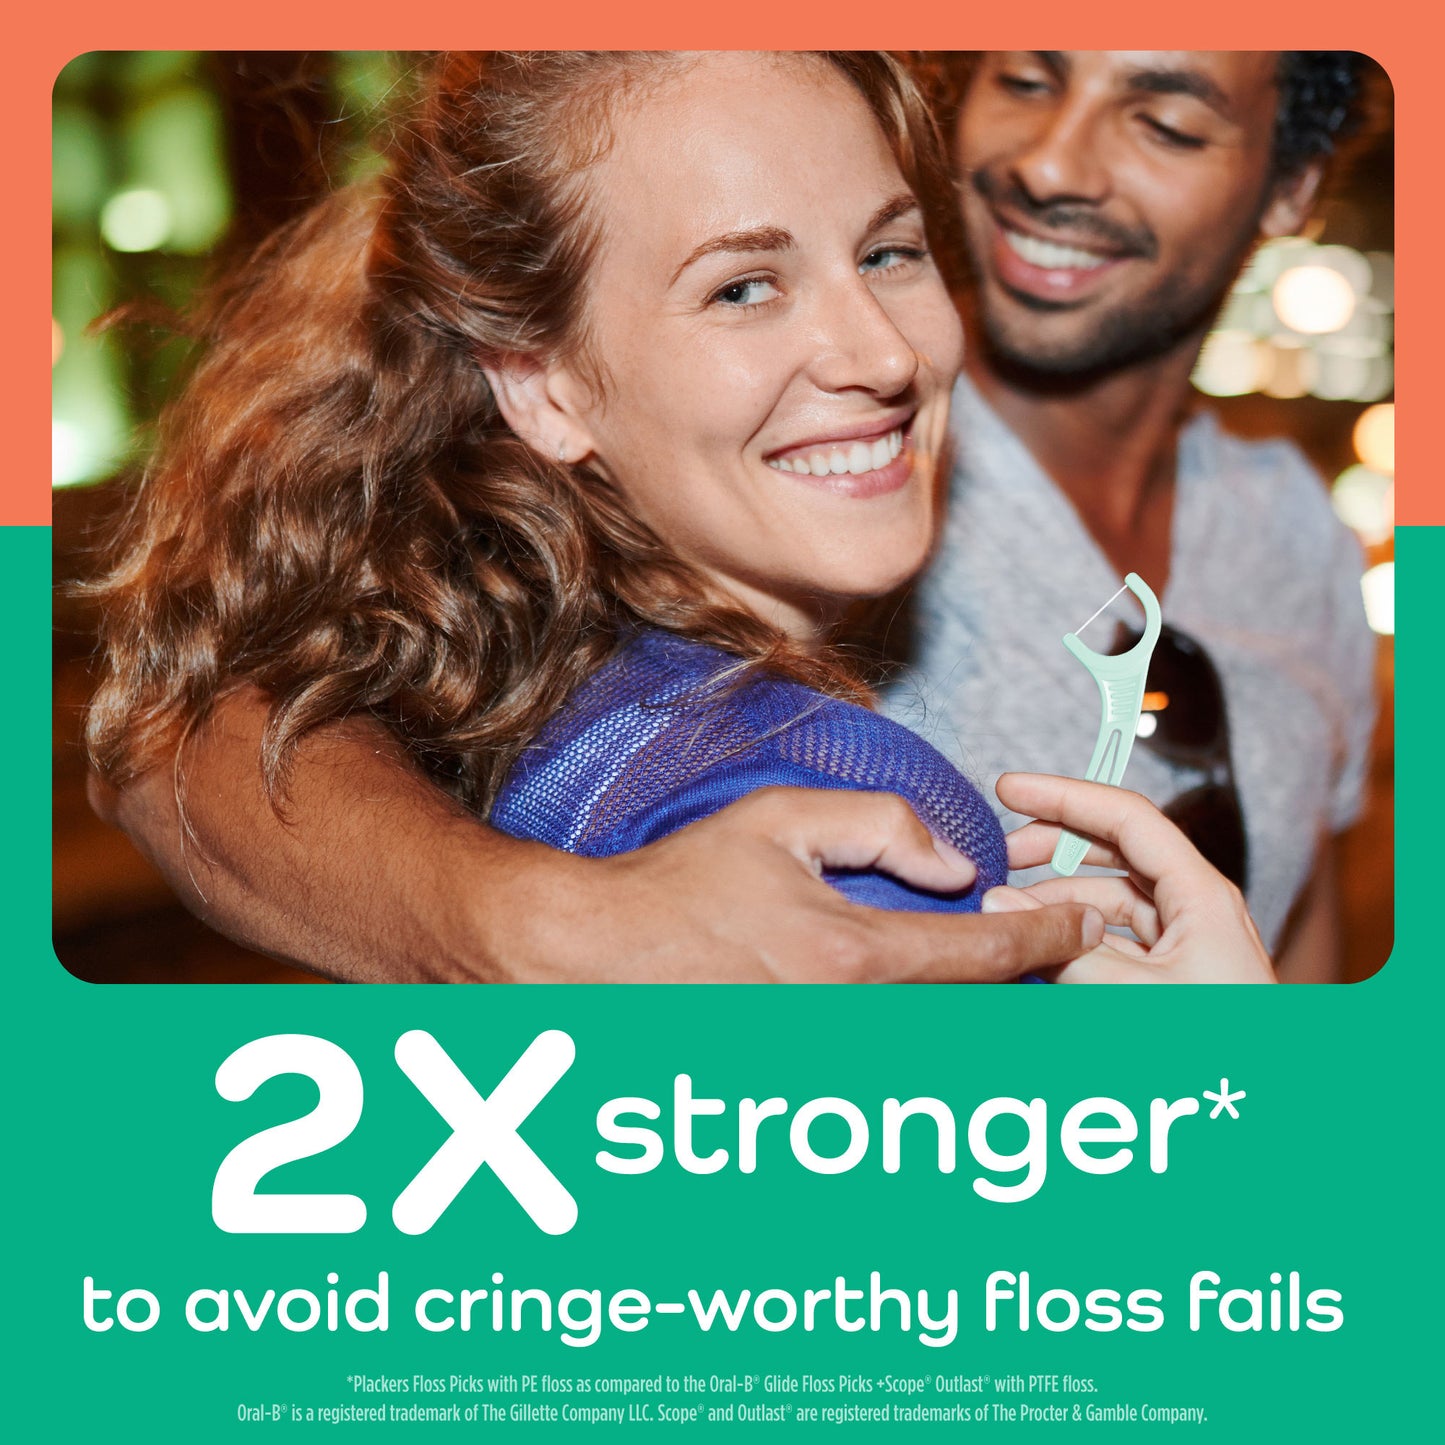 2X stronger to avoid cringe-worthy floss fails